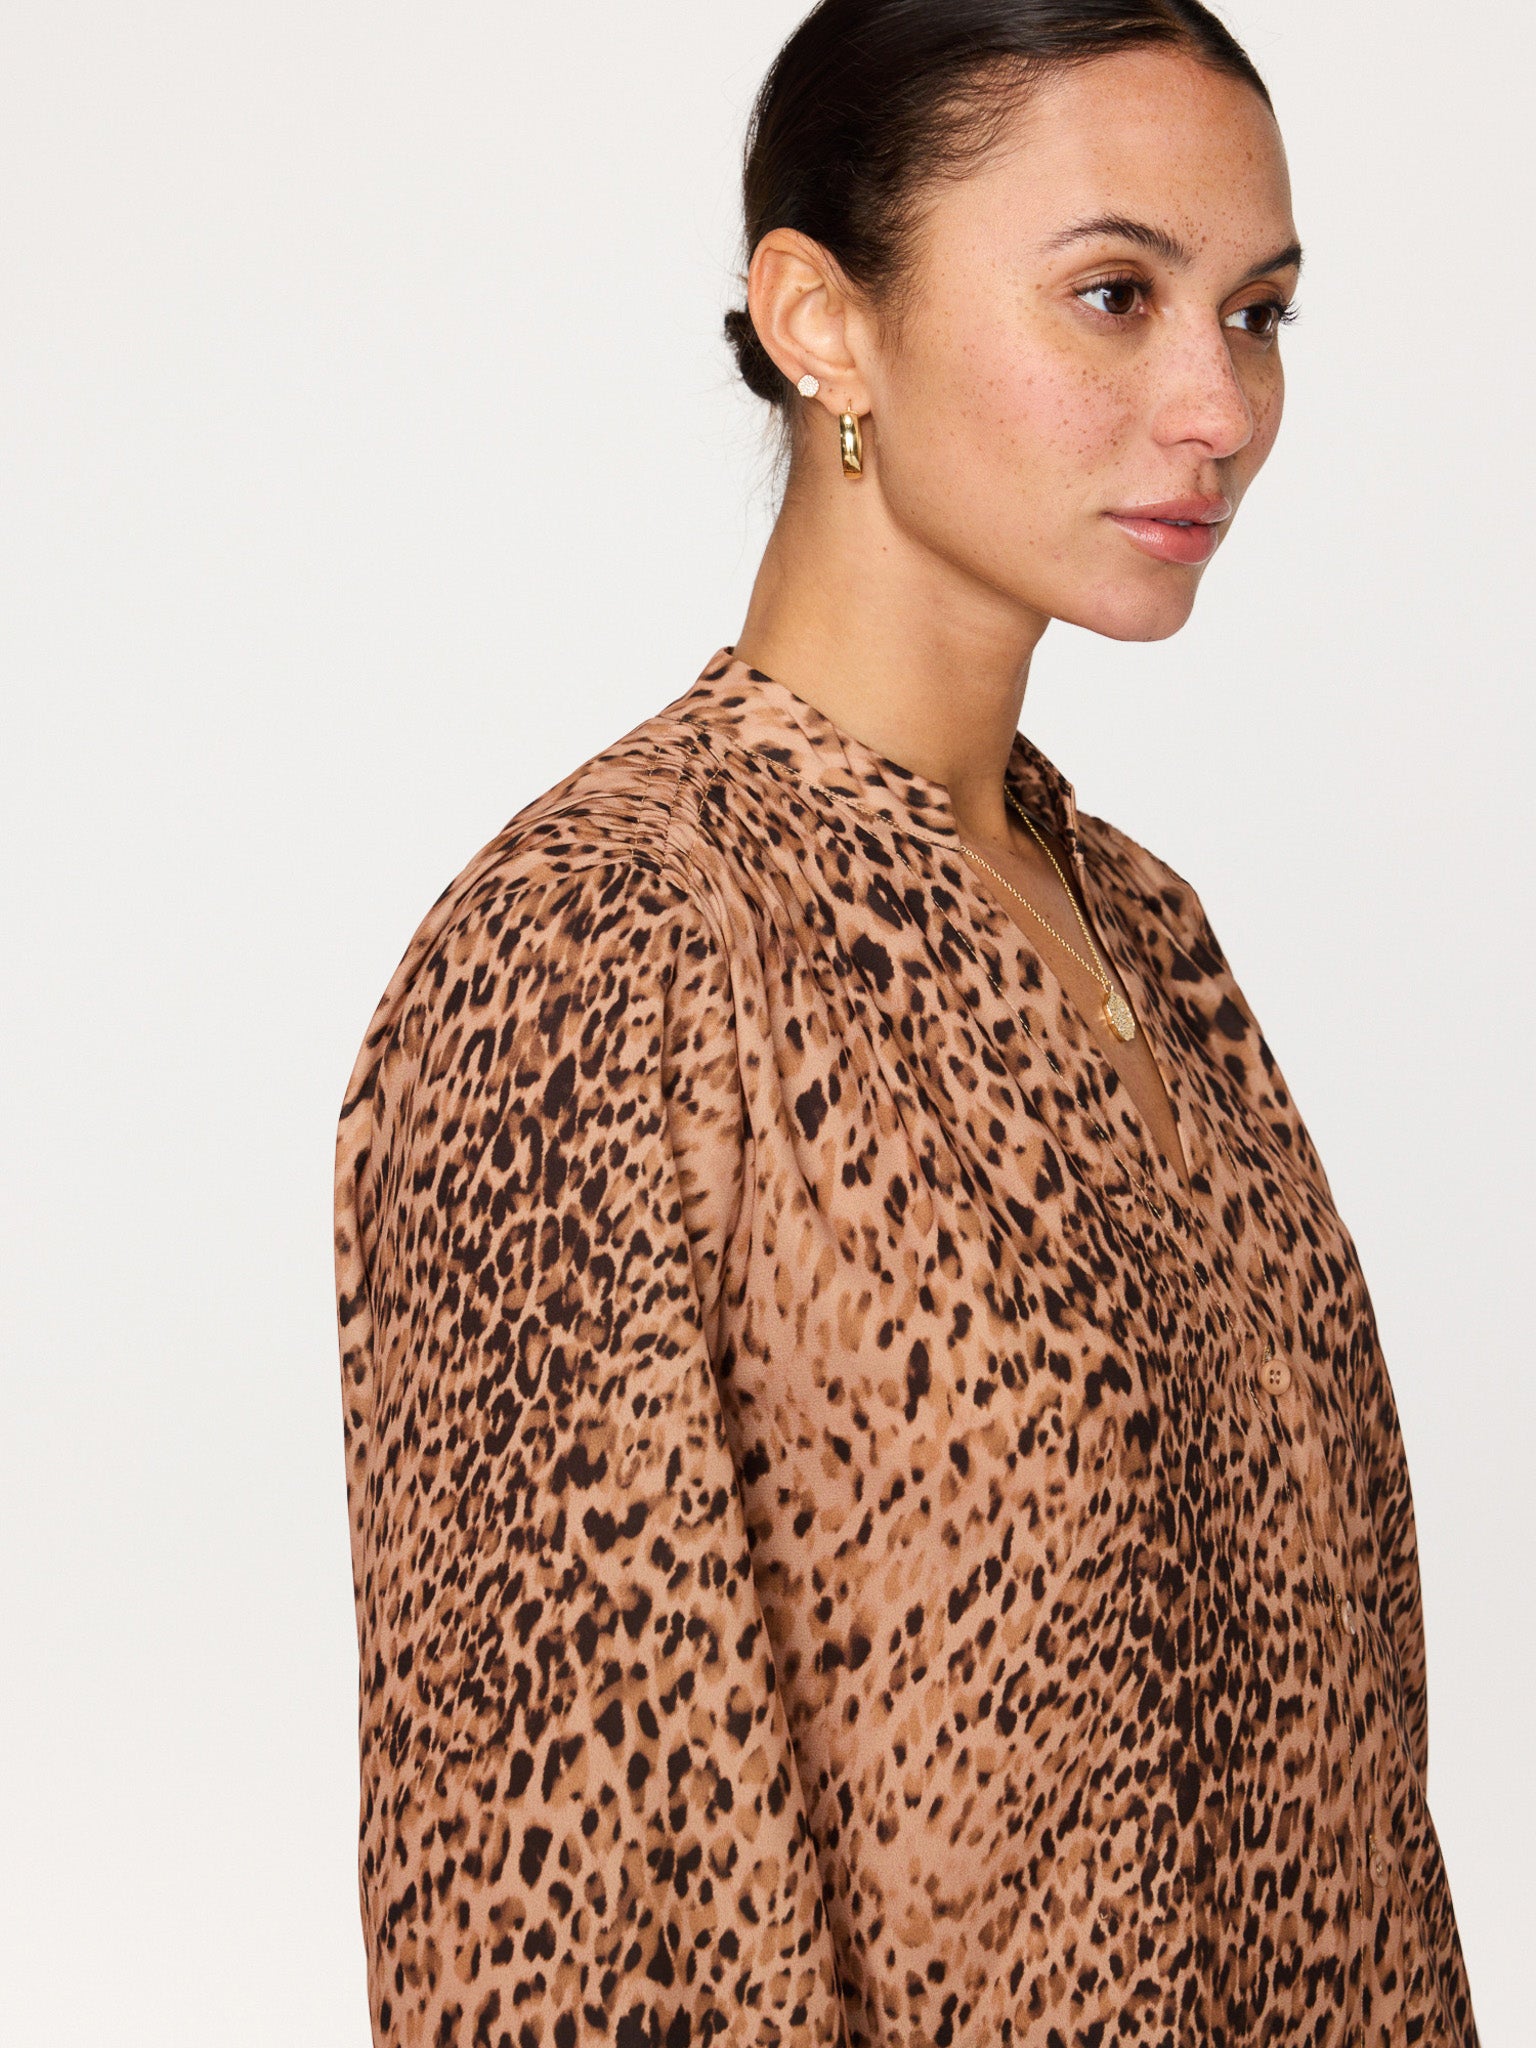 Ember blouse leopard print close up